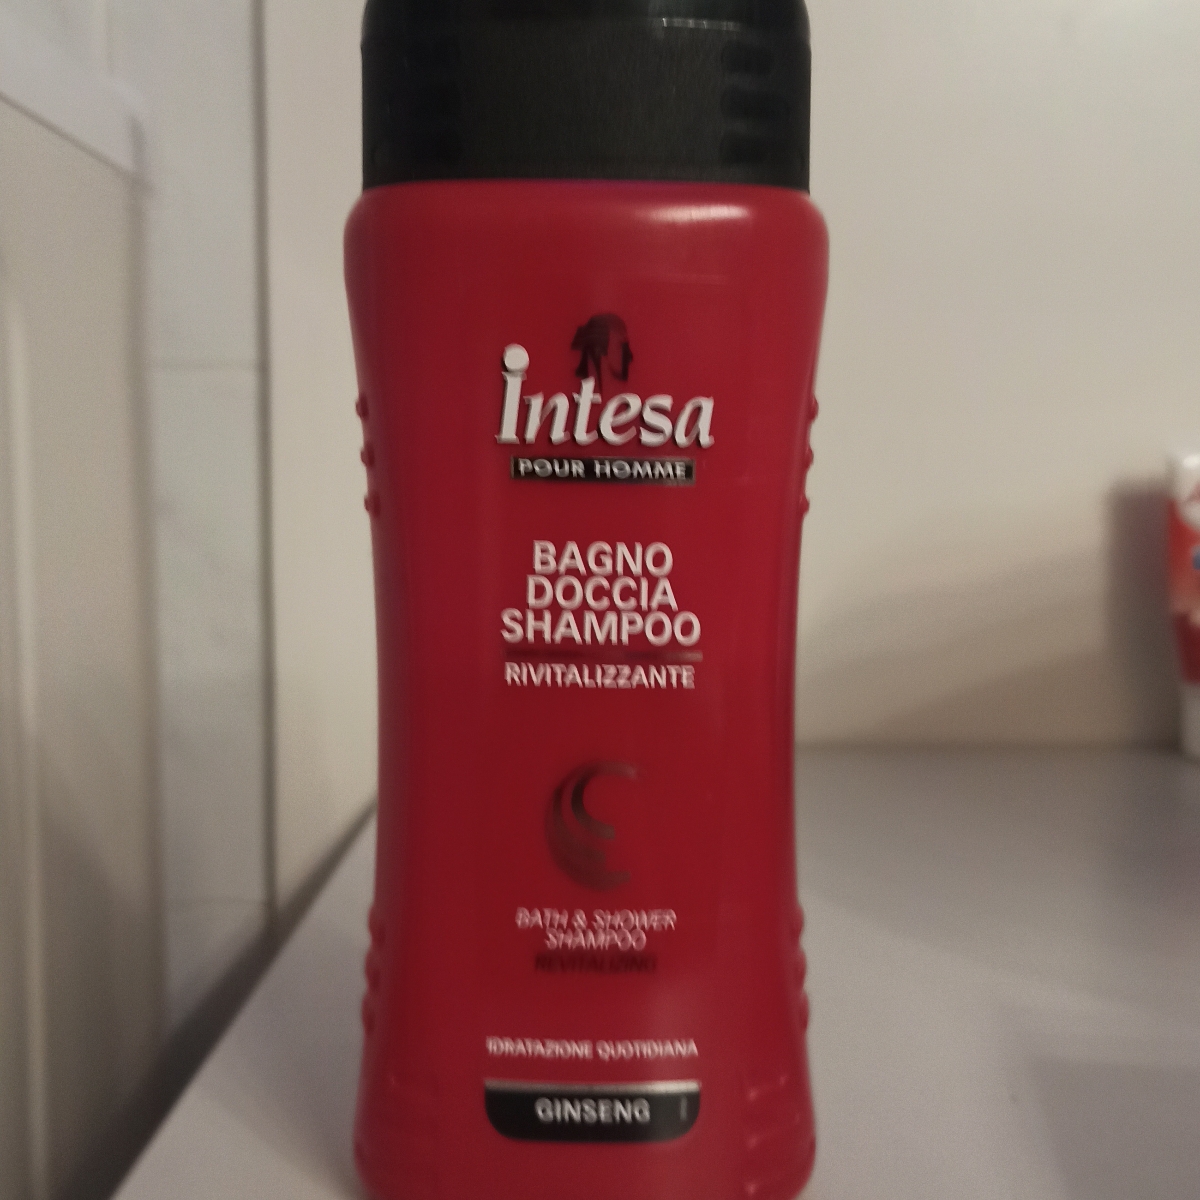 Intesa Bagno Doccia Shampoo Ginseng Reviews